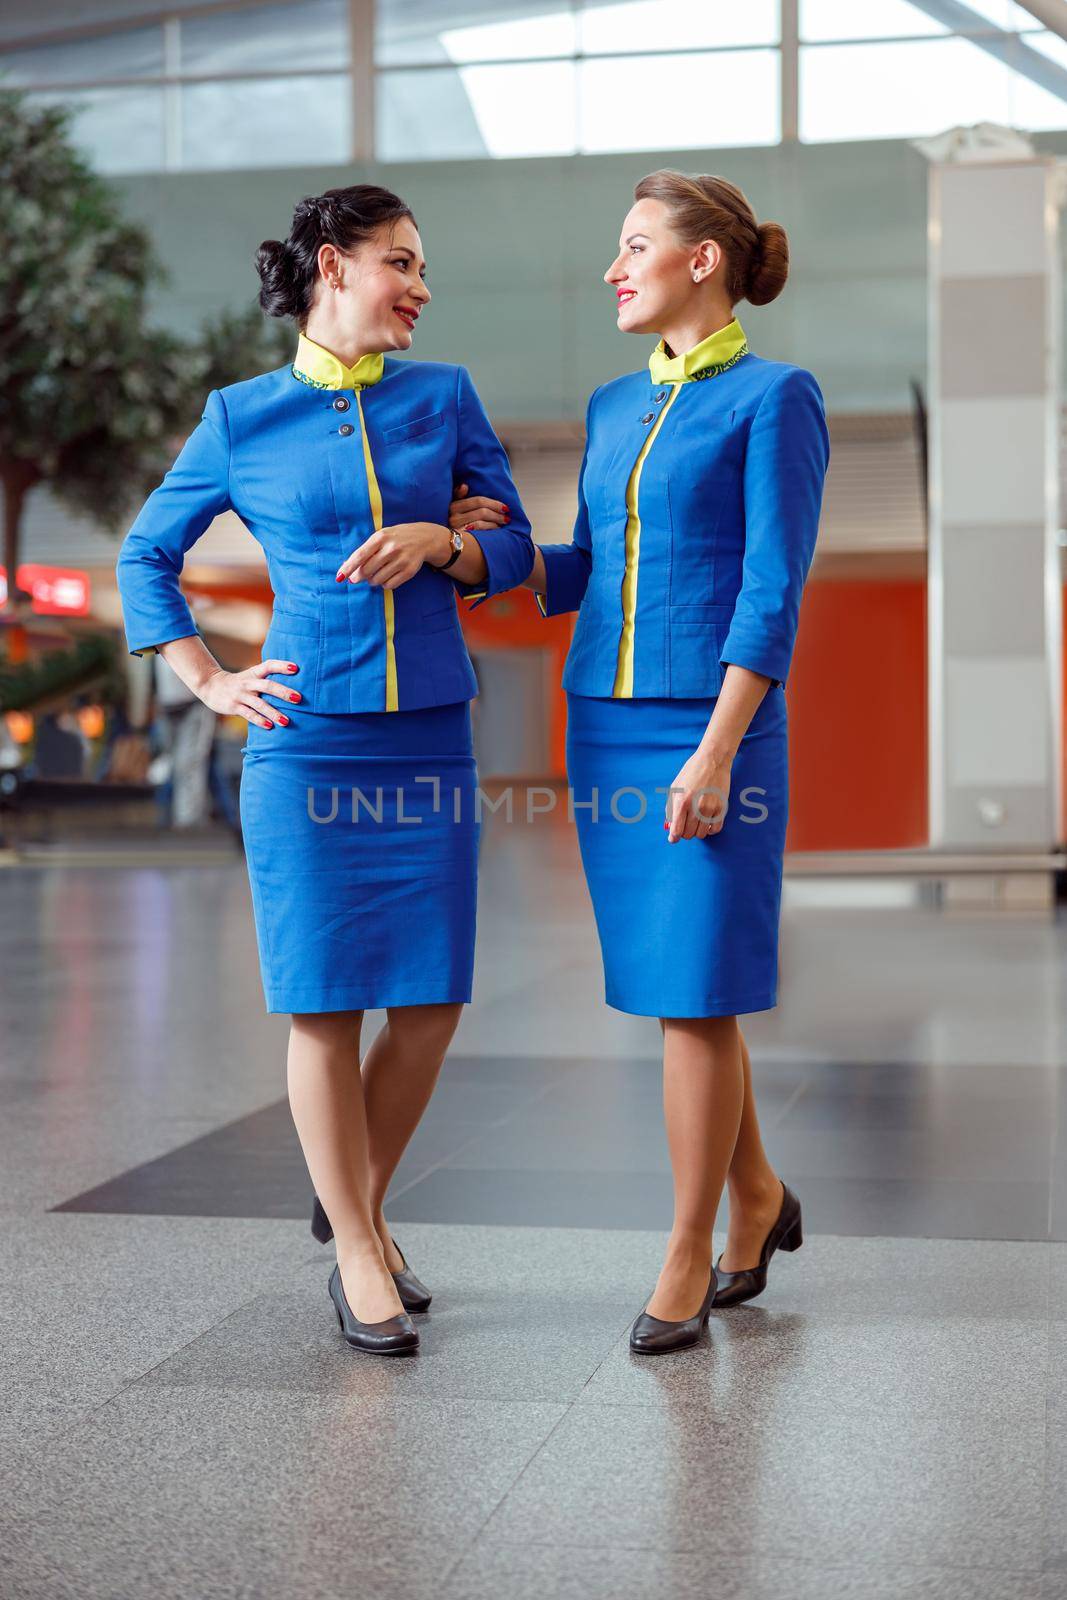 Two cheerful stewardesses talking in airport terminal by Yaroslav_astakhov